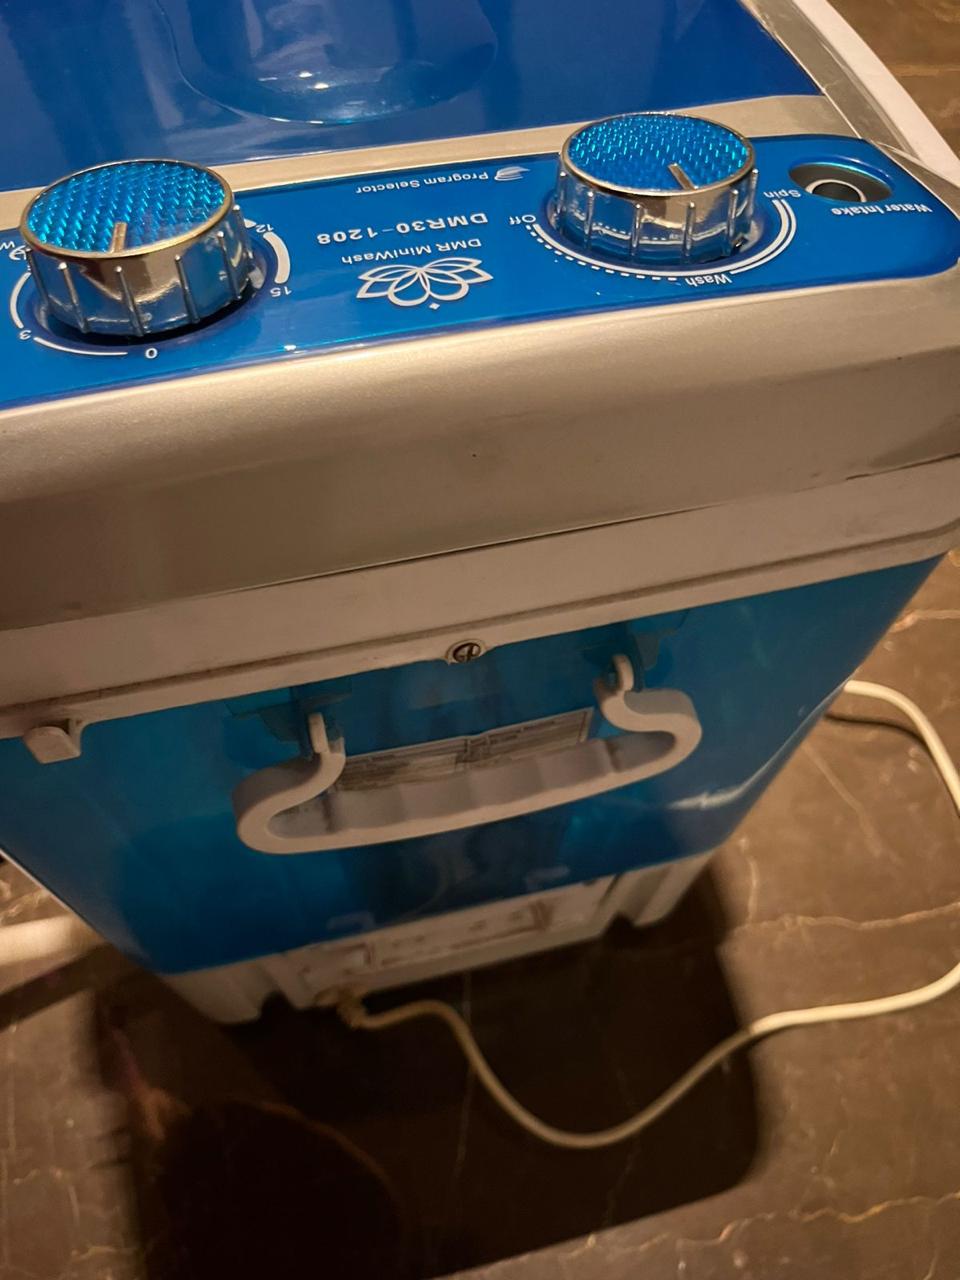 DMR Mini Washing Machine